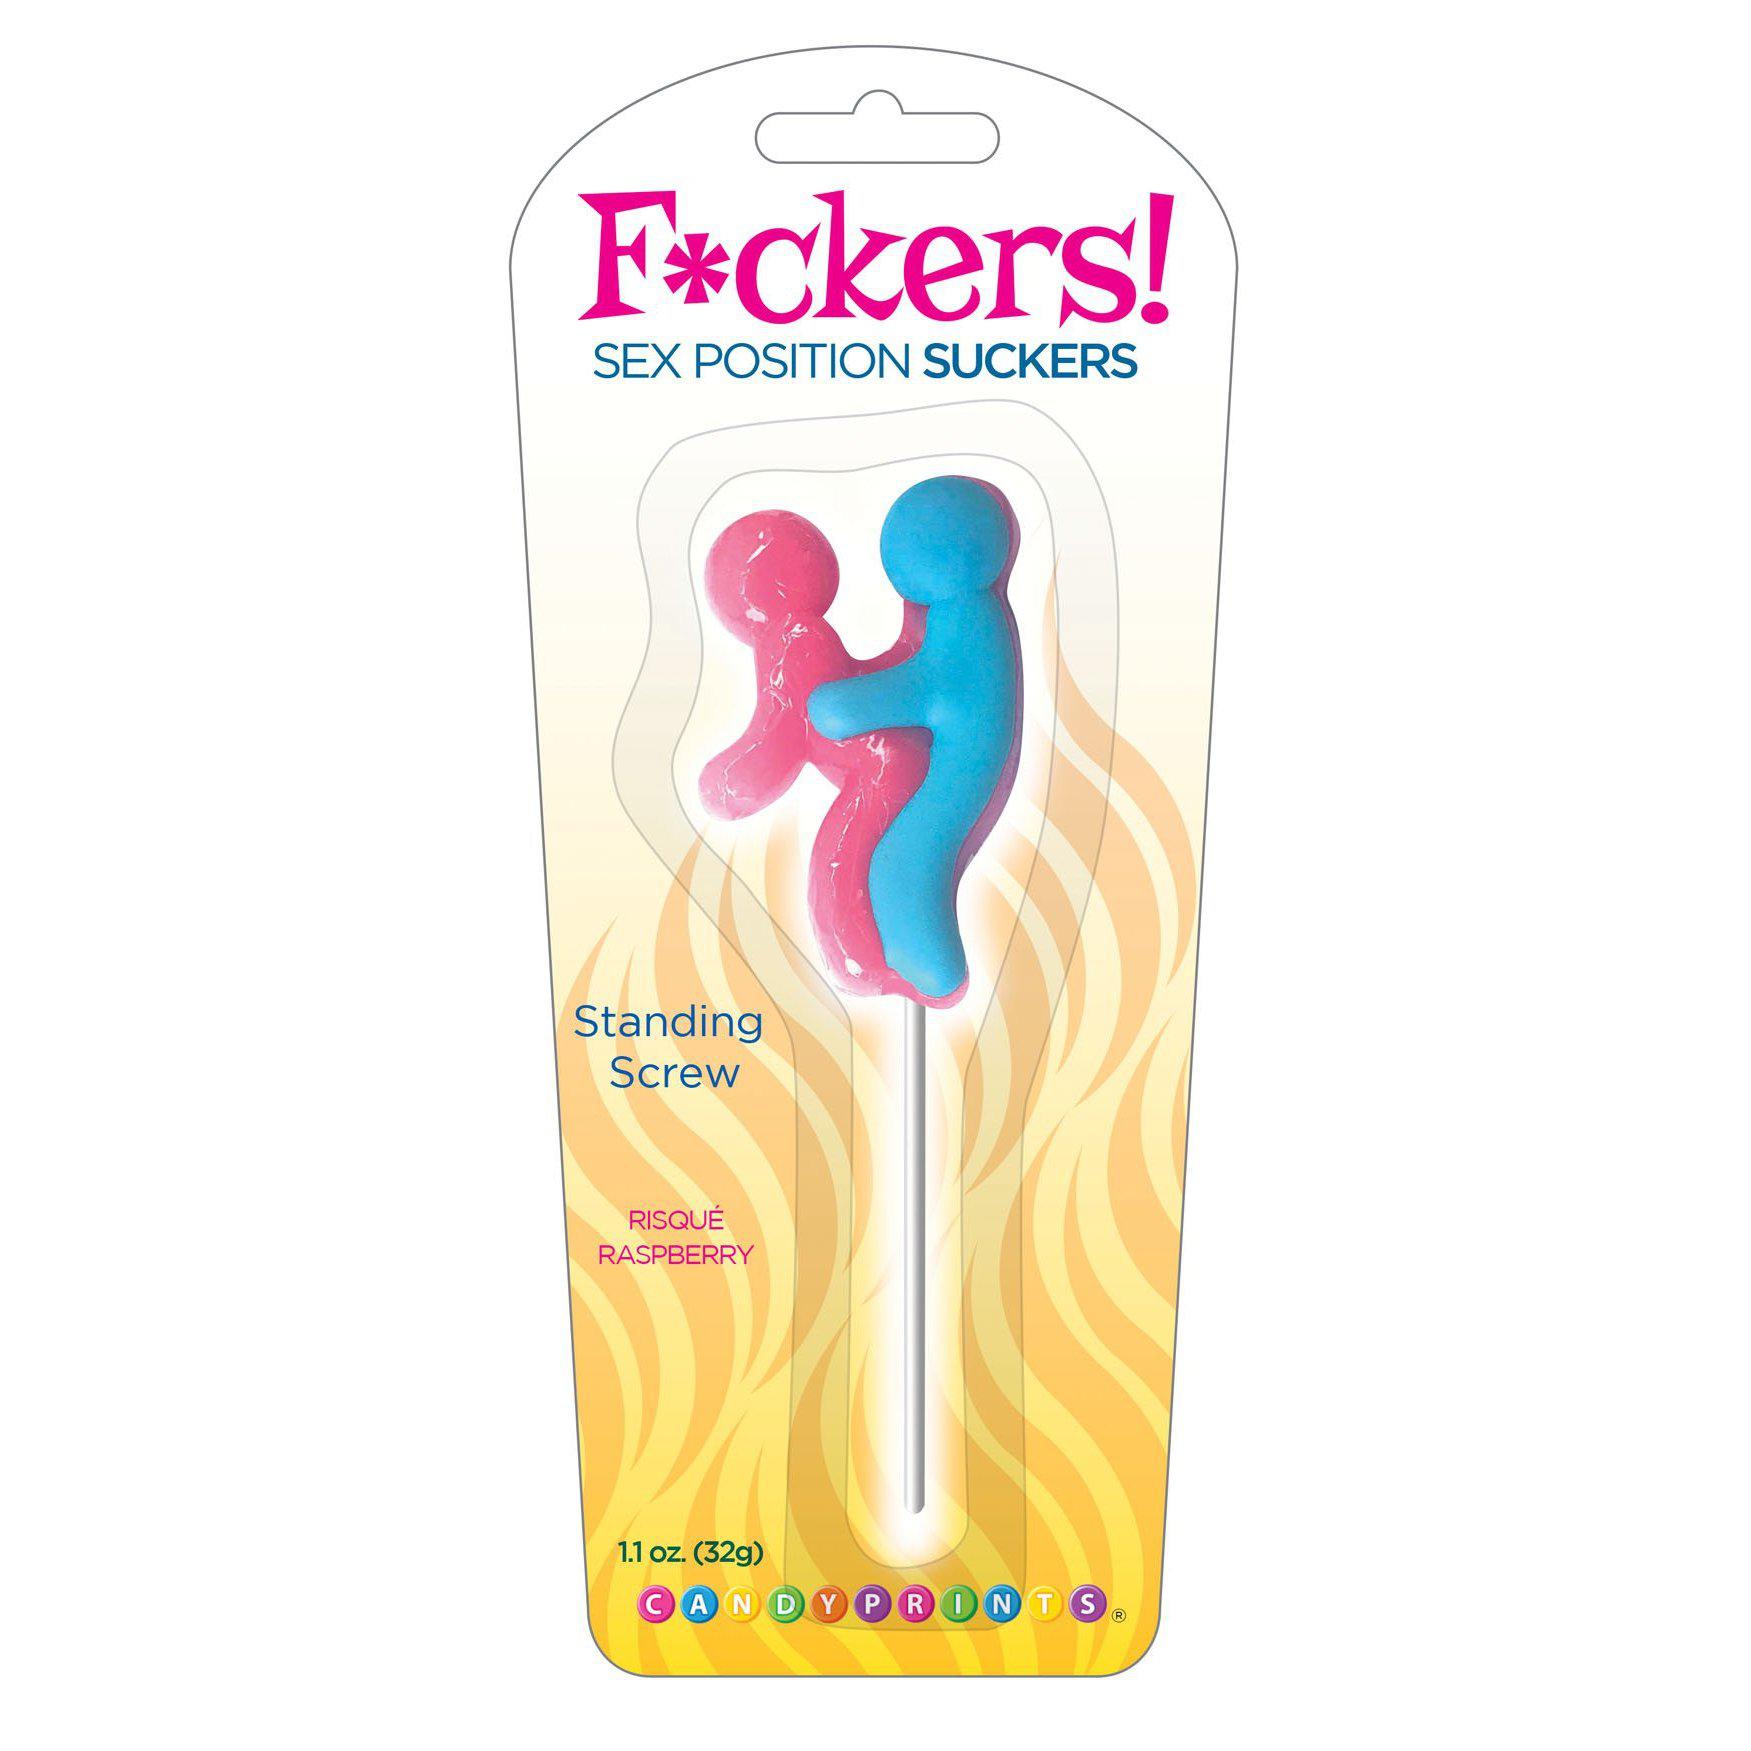 F*Ckers! Sex Position Suckers - Standing Screw - Risque Raspberry